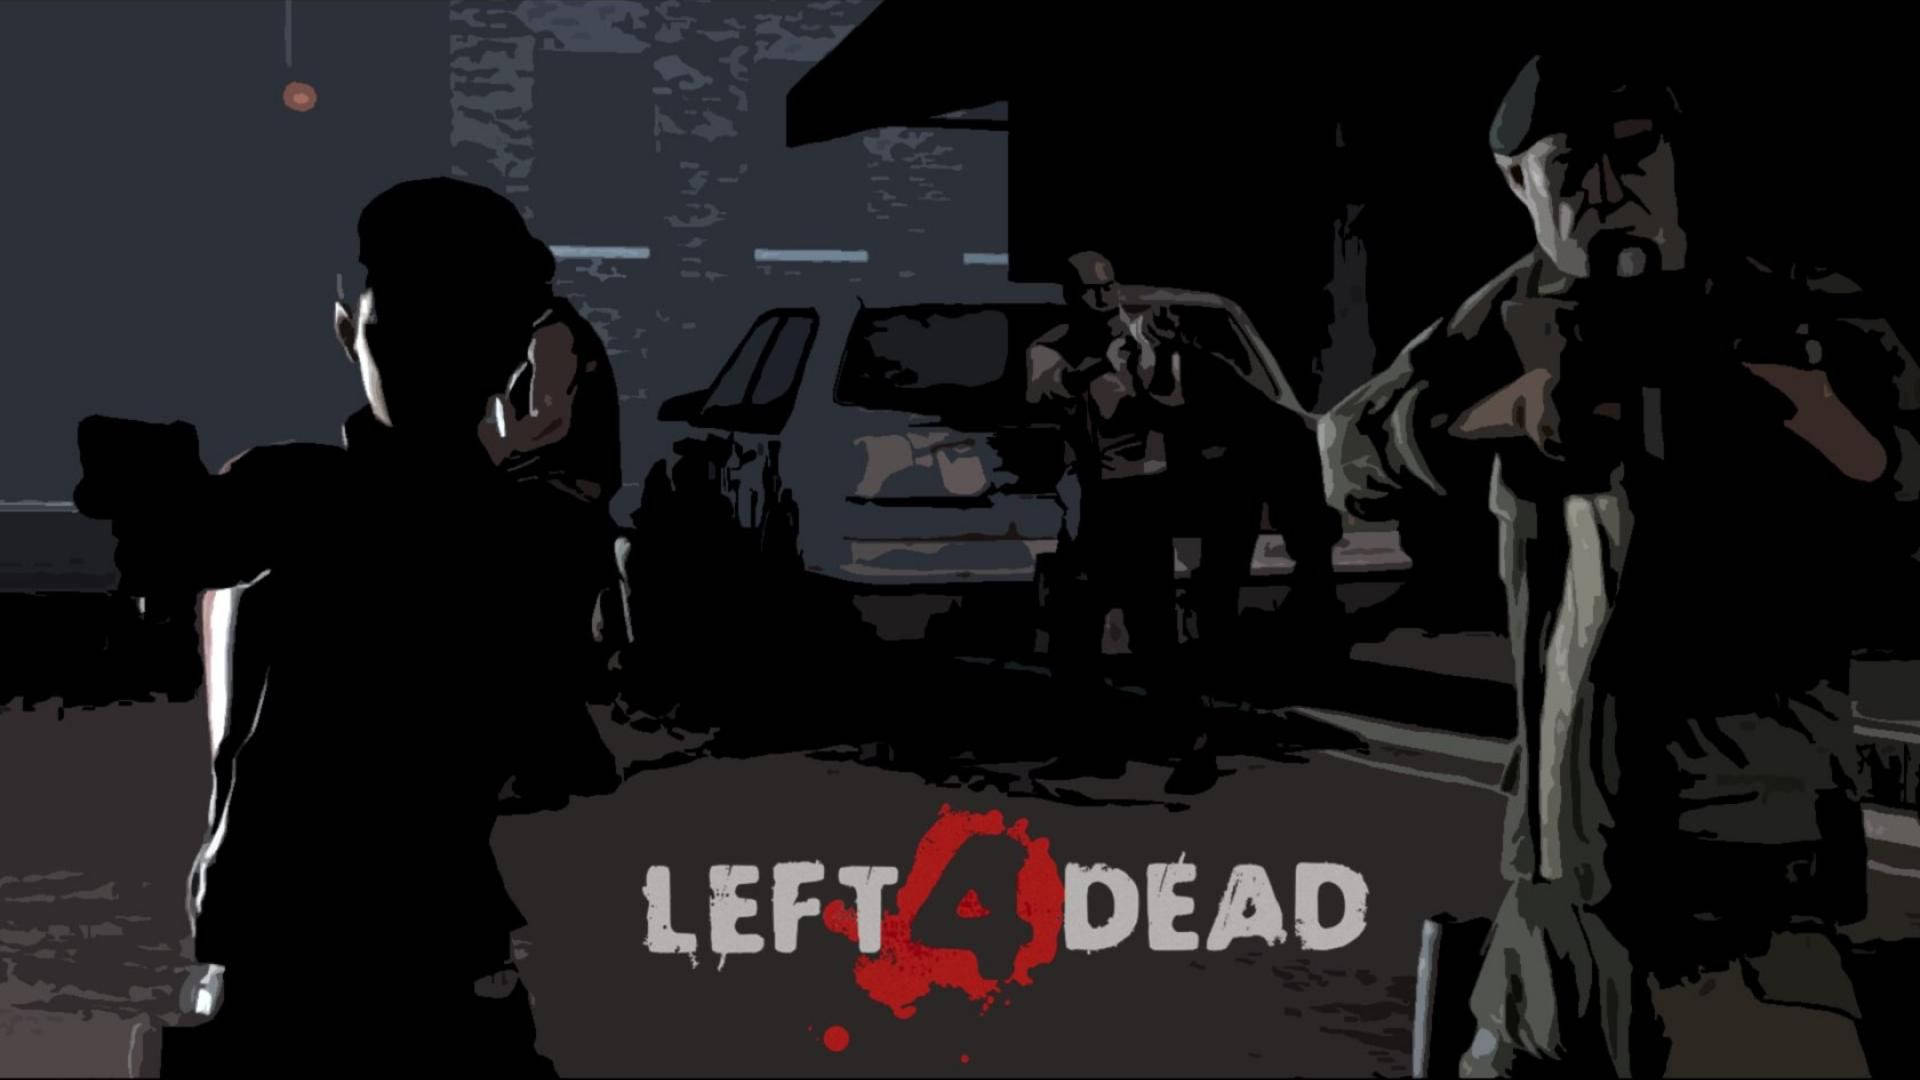 Left 4 Dead Dark Poster